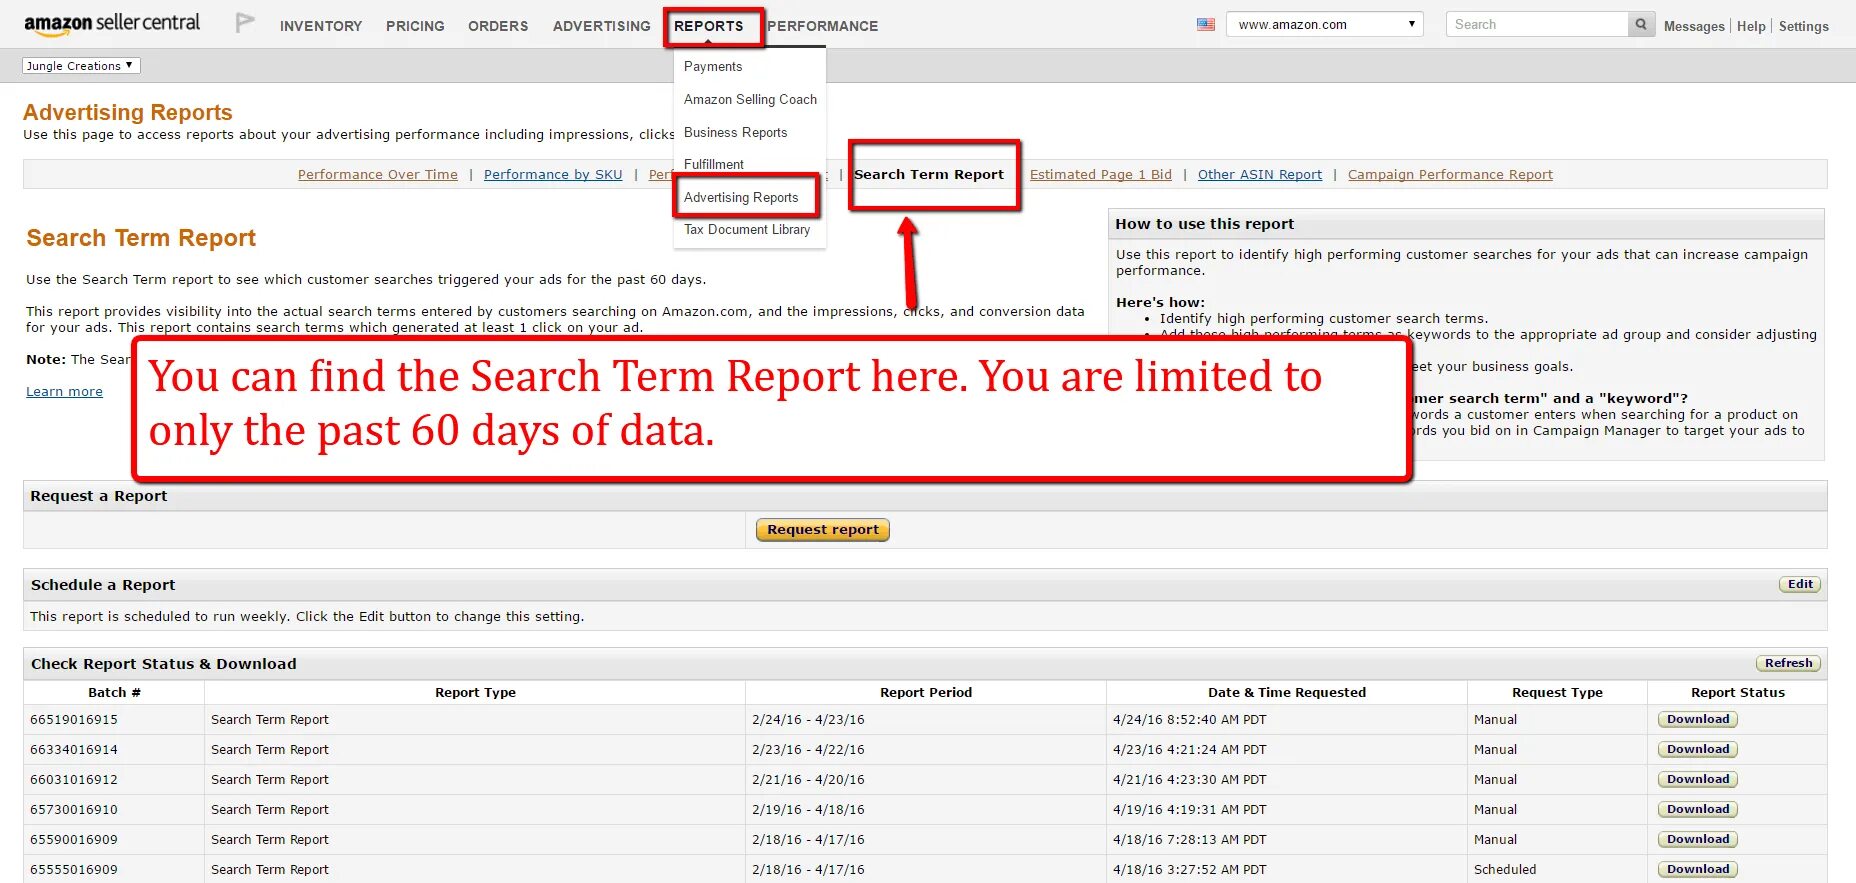 Amazon seller account. Search Amazon. Seller Central Amazon .com. Терм репорт шаблоны.